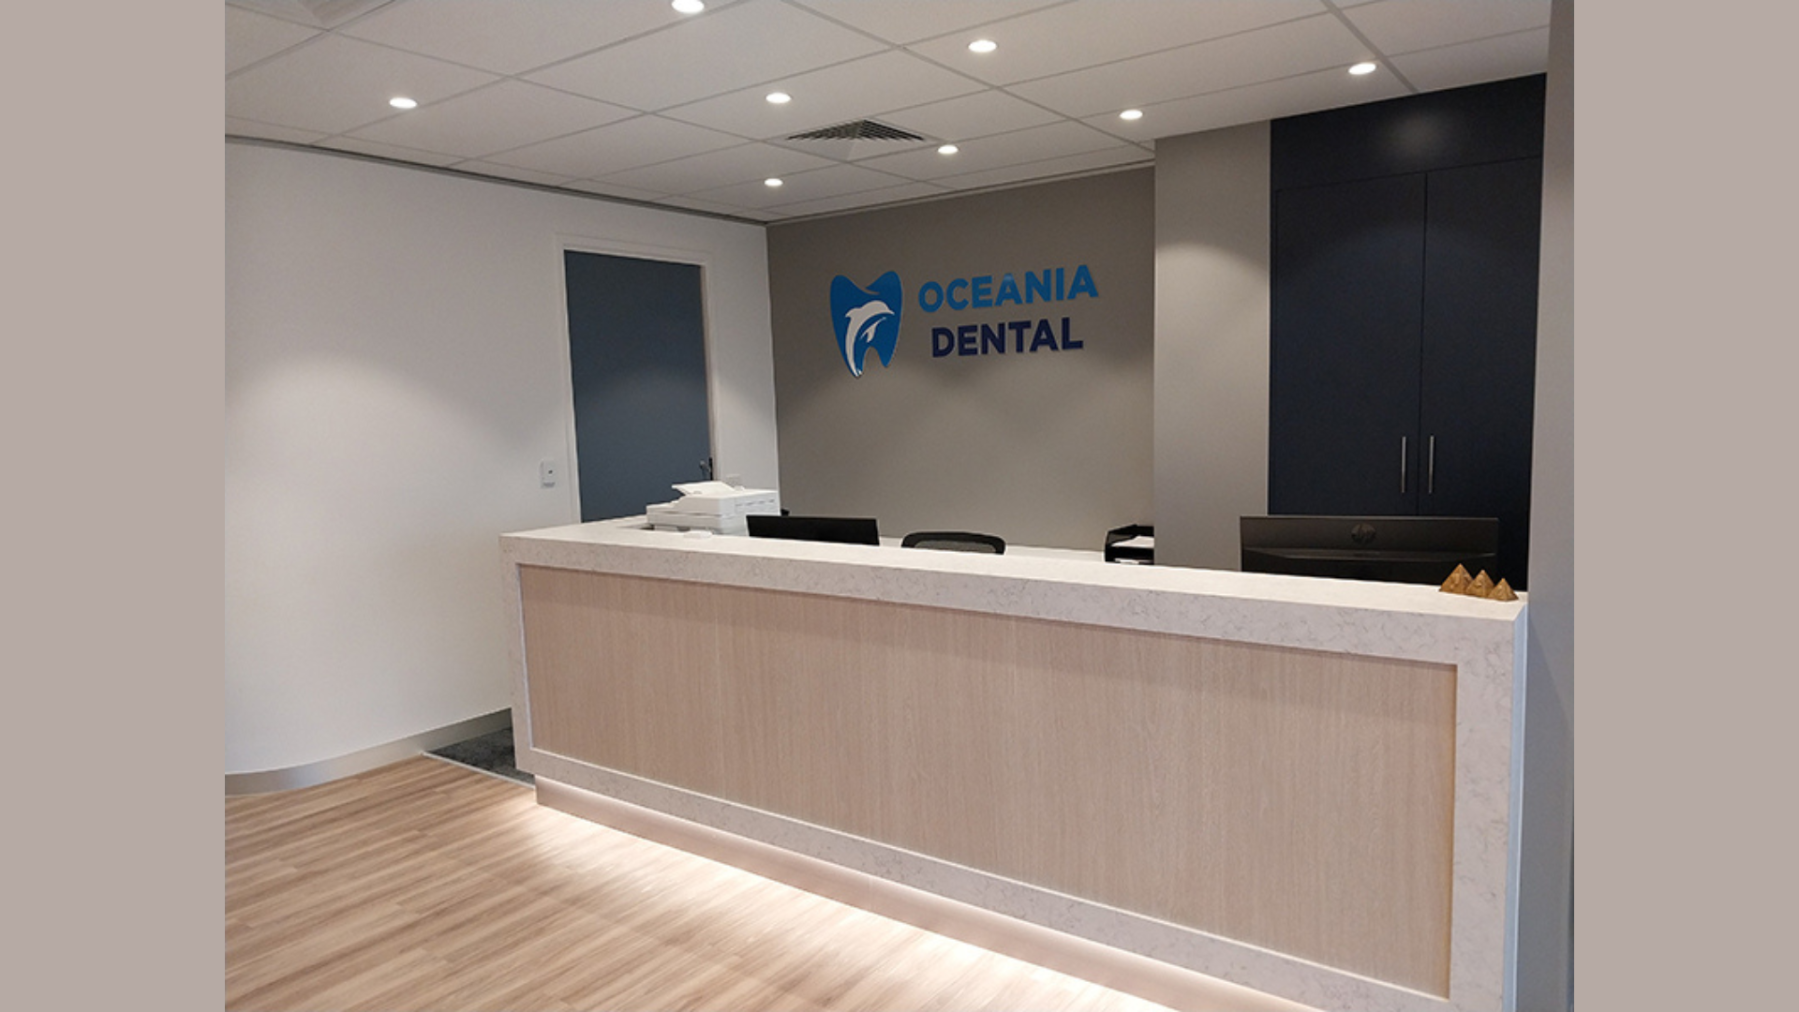 Oceania Dental